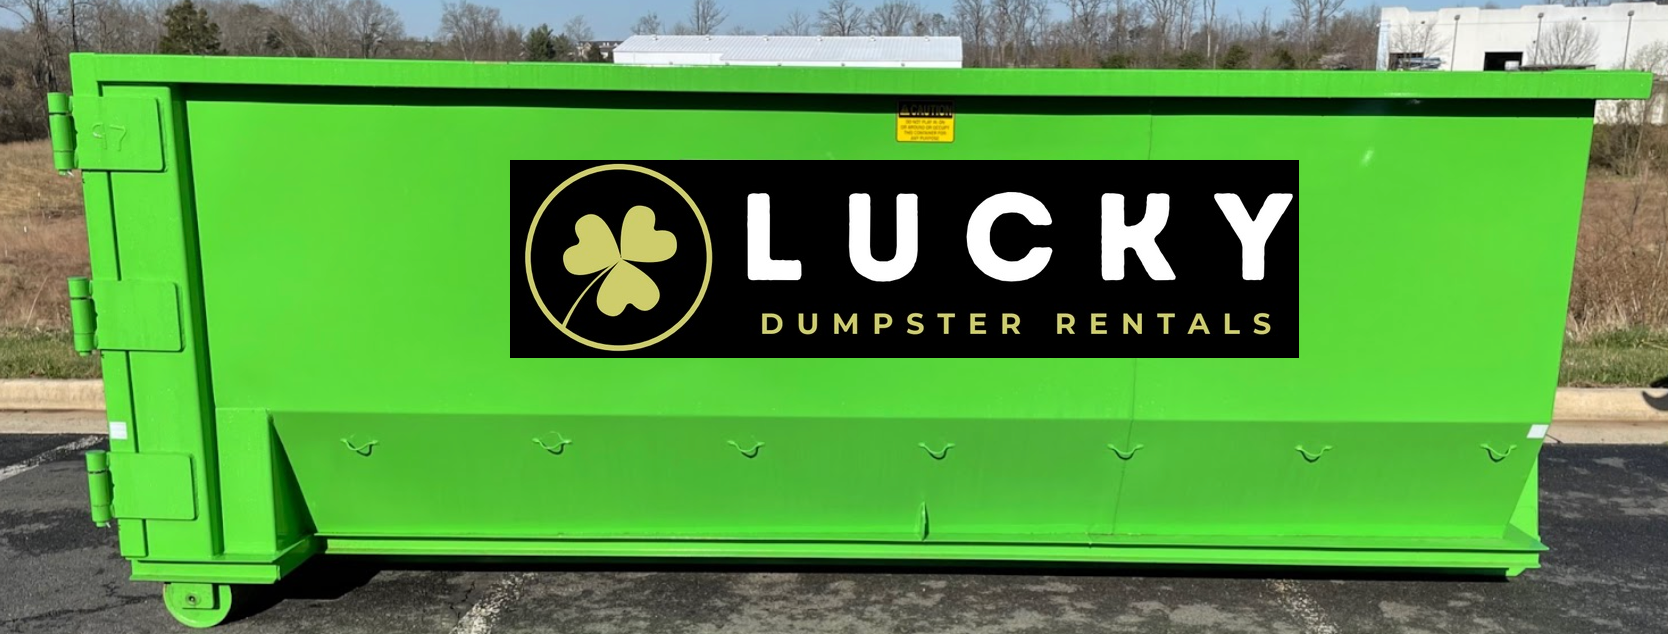 Fairburn Dumpster Rental - Lucky Dumpster Rentals of Fairburn, GA